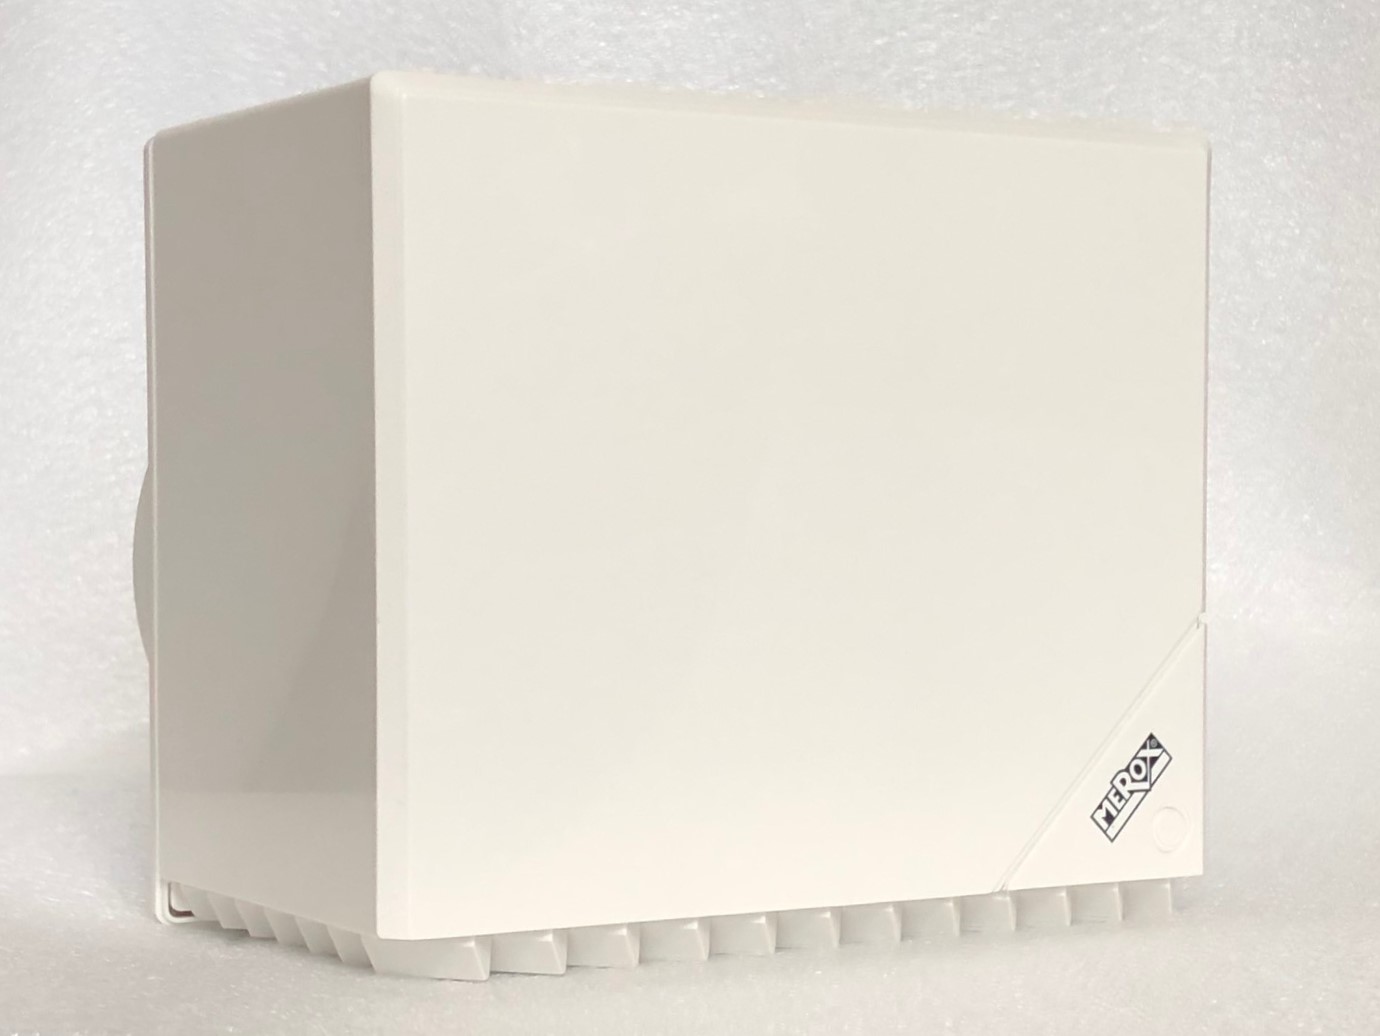 Вентилятор для подсобных помещений Marley Merox L100A